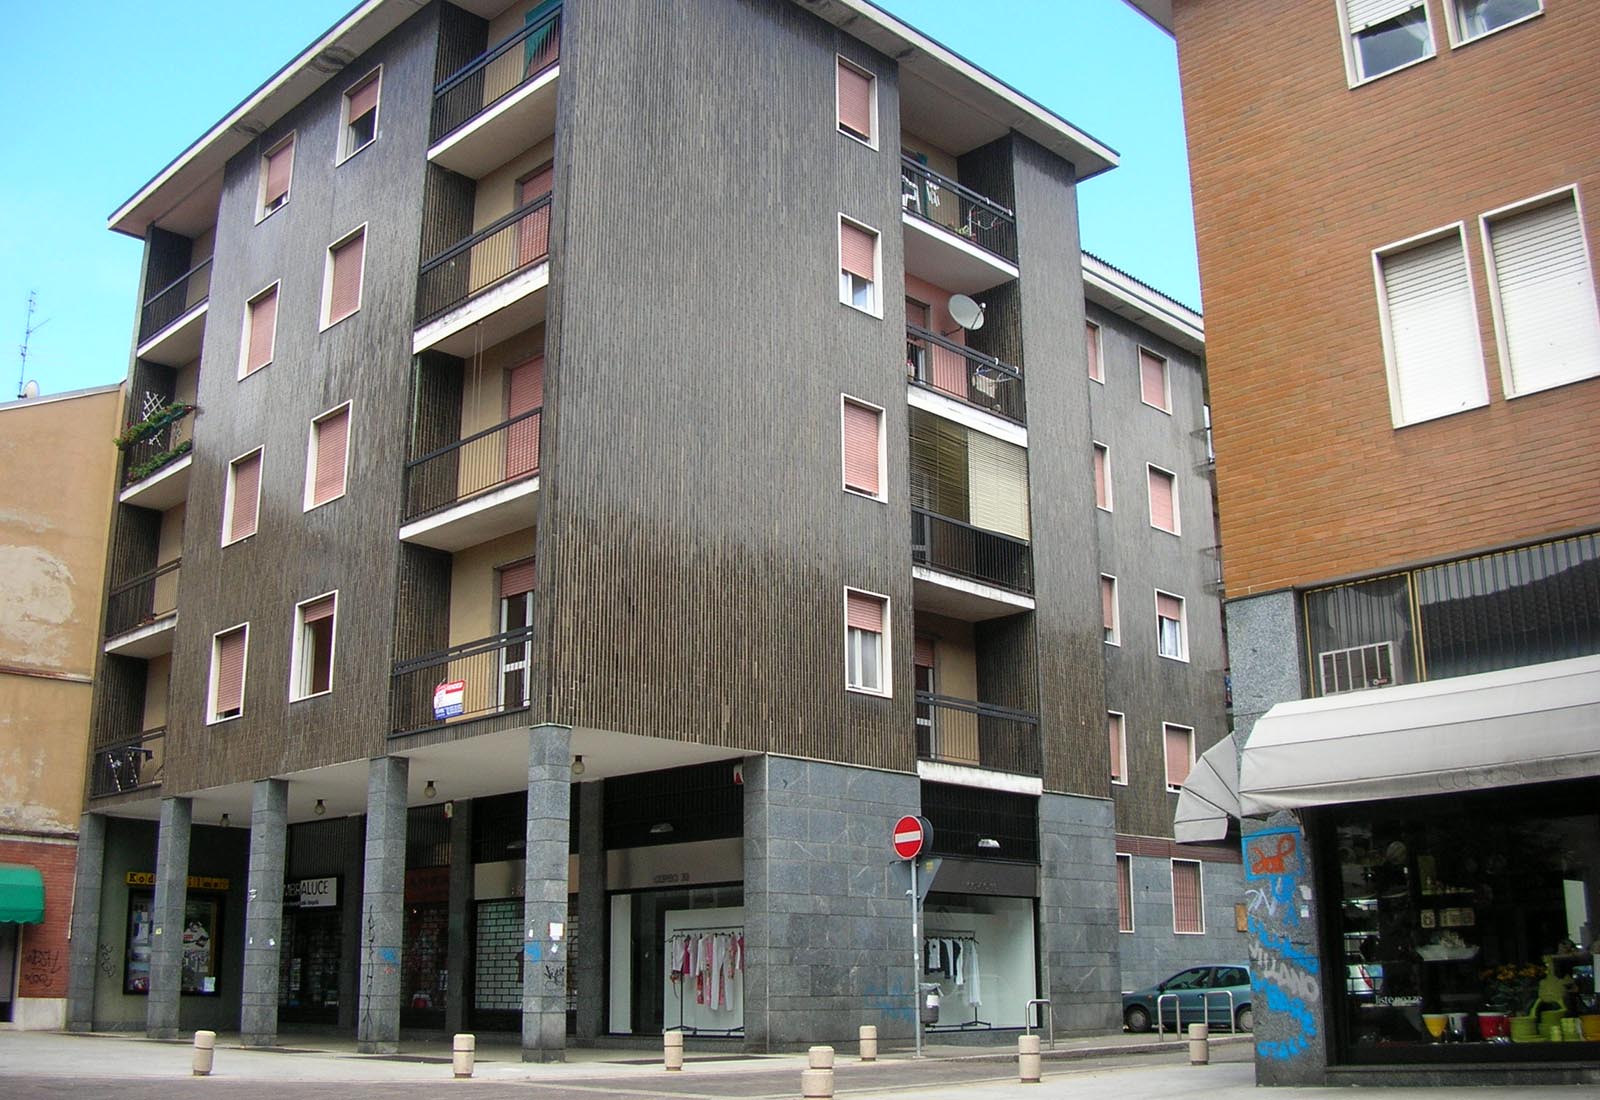 Apartment buildings complex in R. Serra street in Rho - View